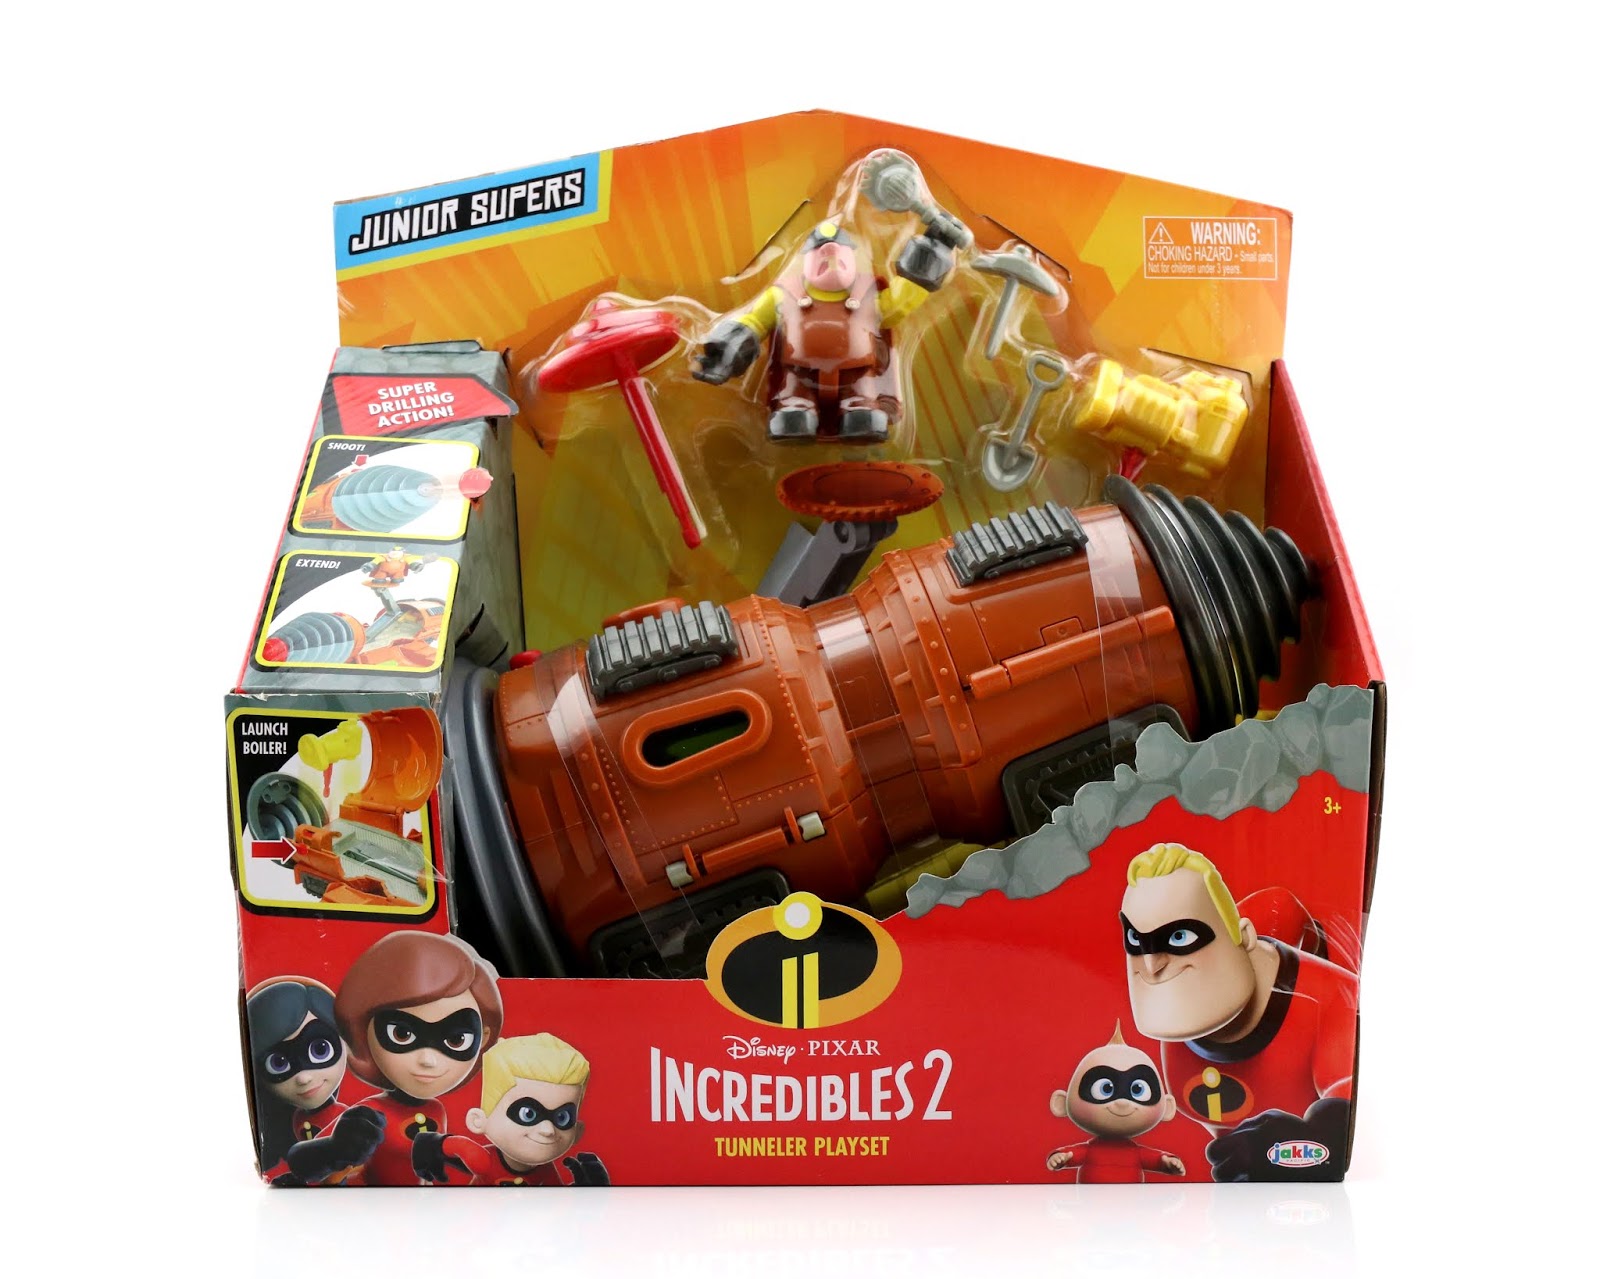 Incredibles 2 "Junior Supers" Tunneler Playset Jakks Pacific